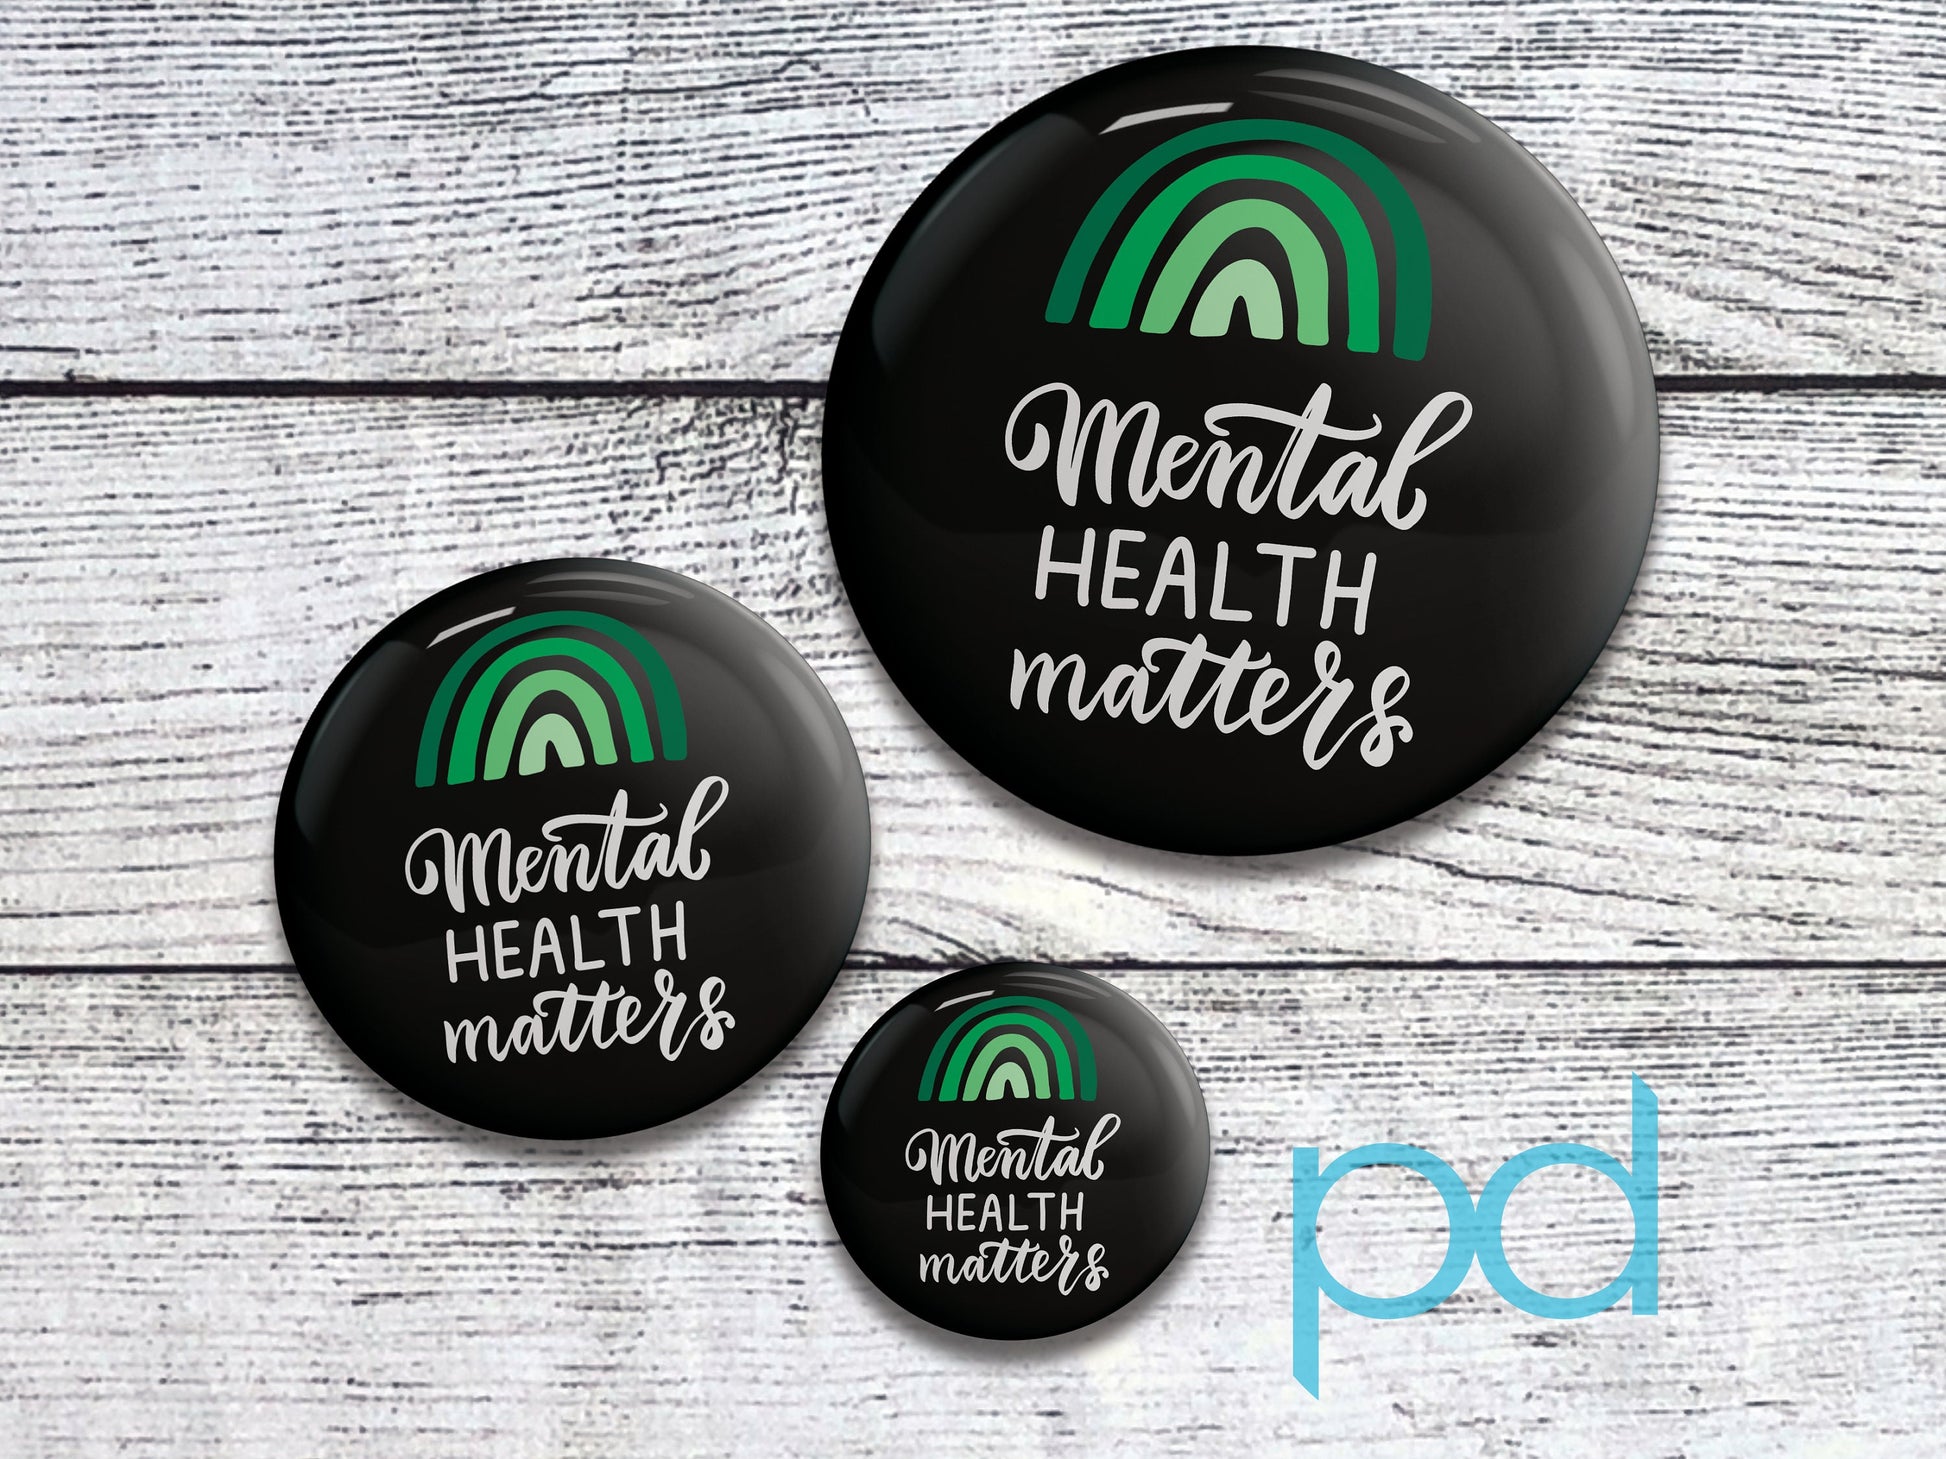 Mental Health Awareness Pin Badge, Green Awareness Rainbow Pin Back Button Badge